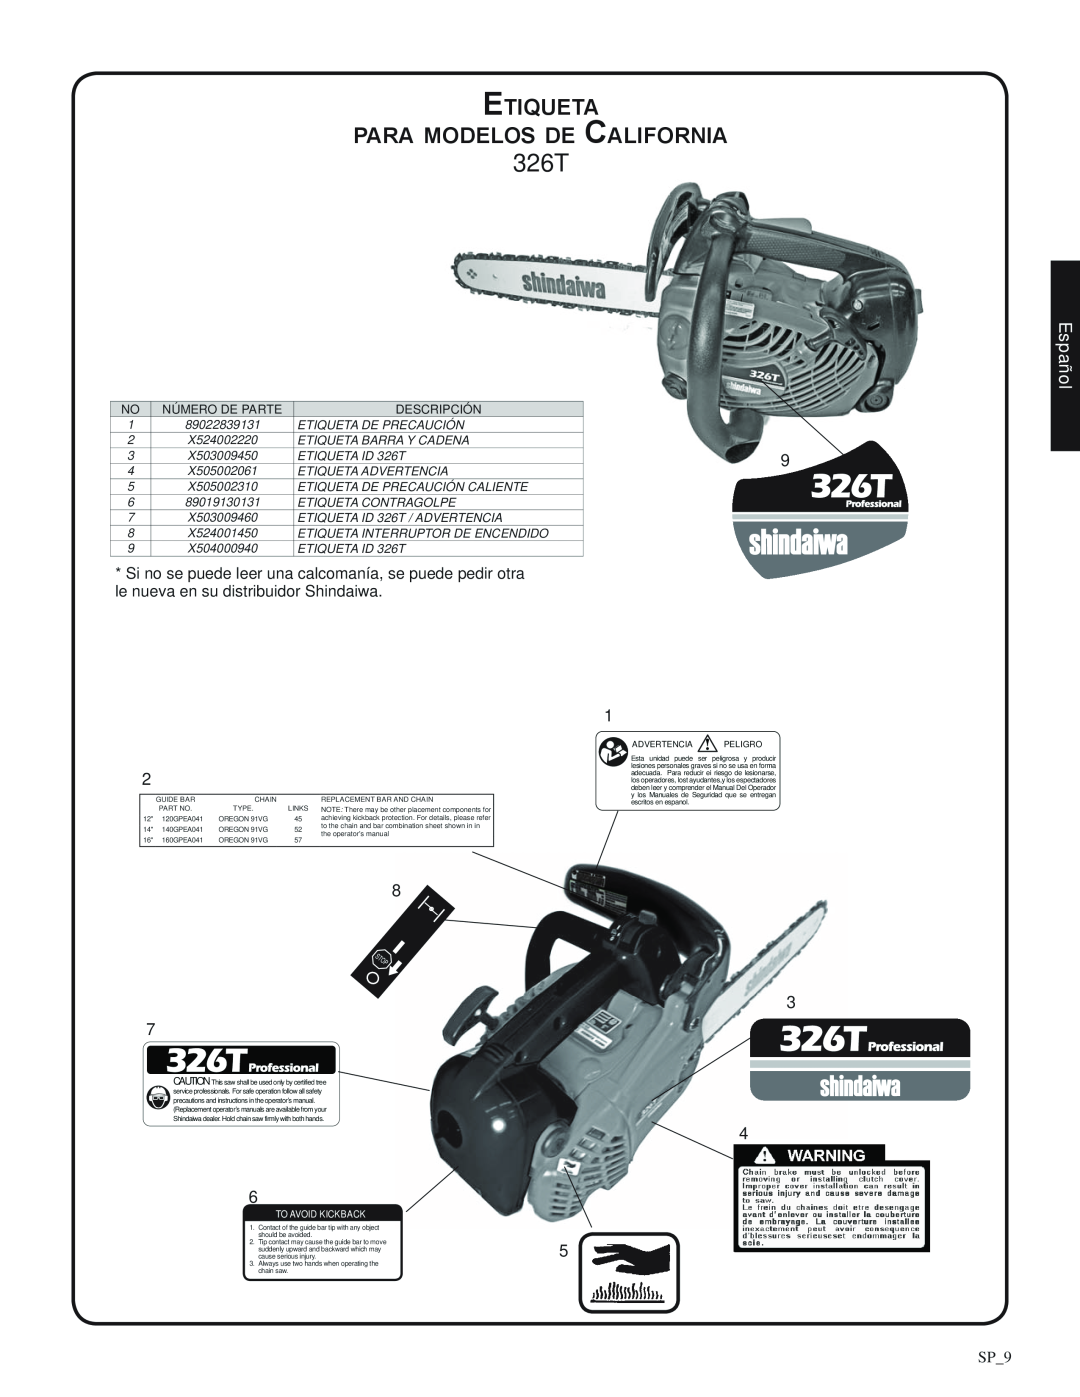 Shindaiwa 326T, 82085 manual Etiqueta para modelos de California, Español, SP_9, NO Número de parte 